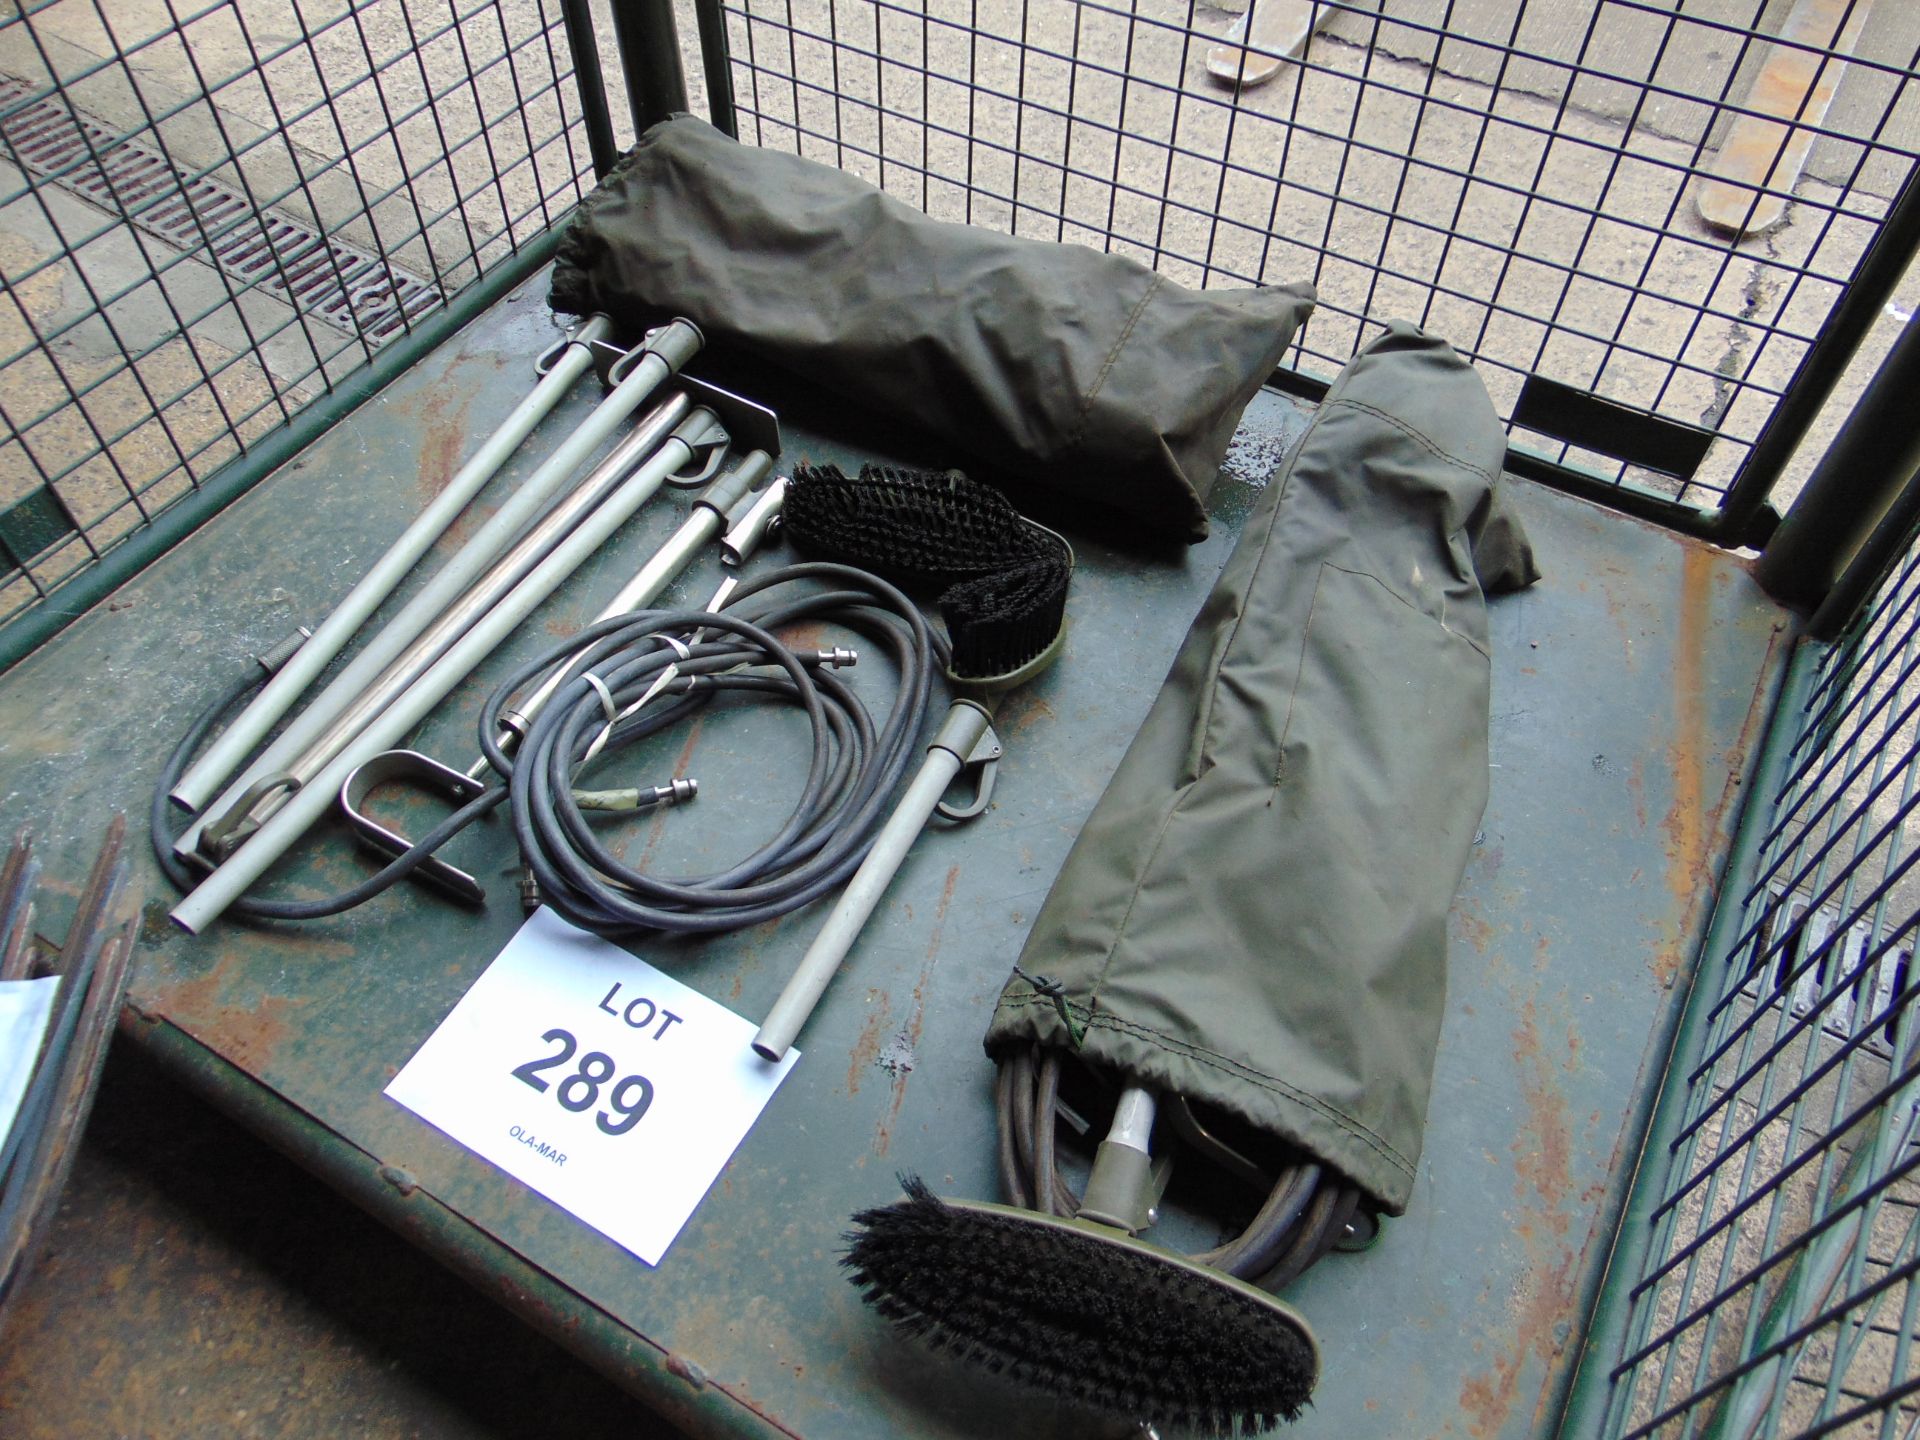 2x Washdown kits as shown